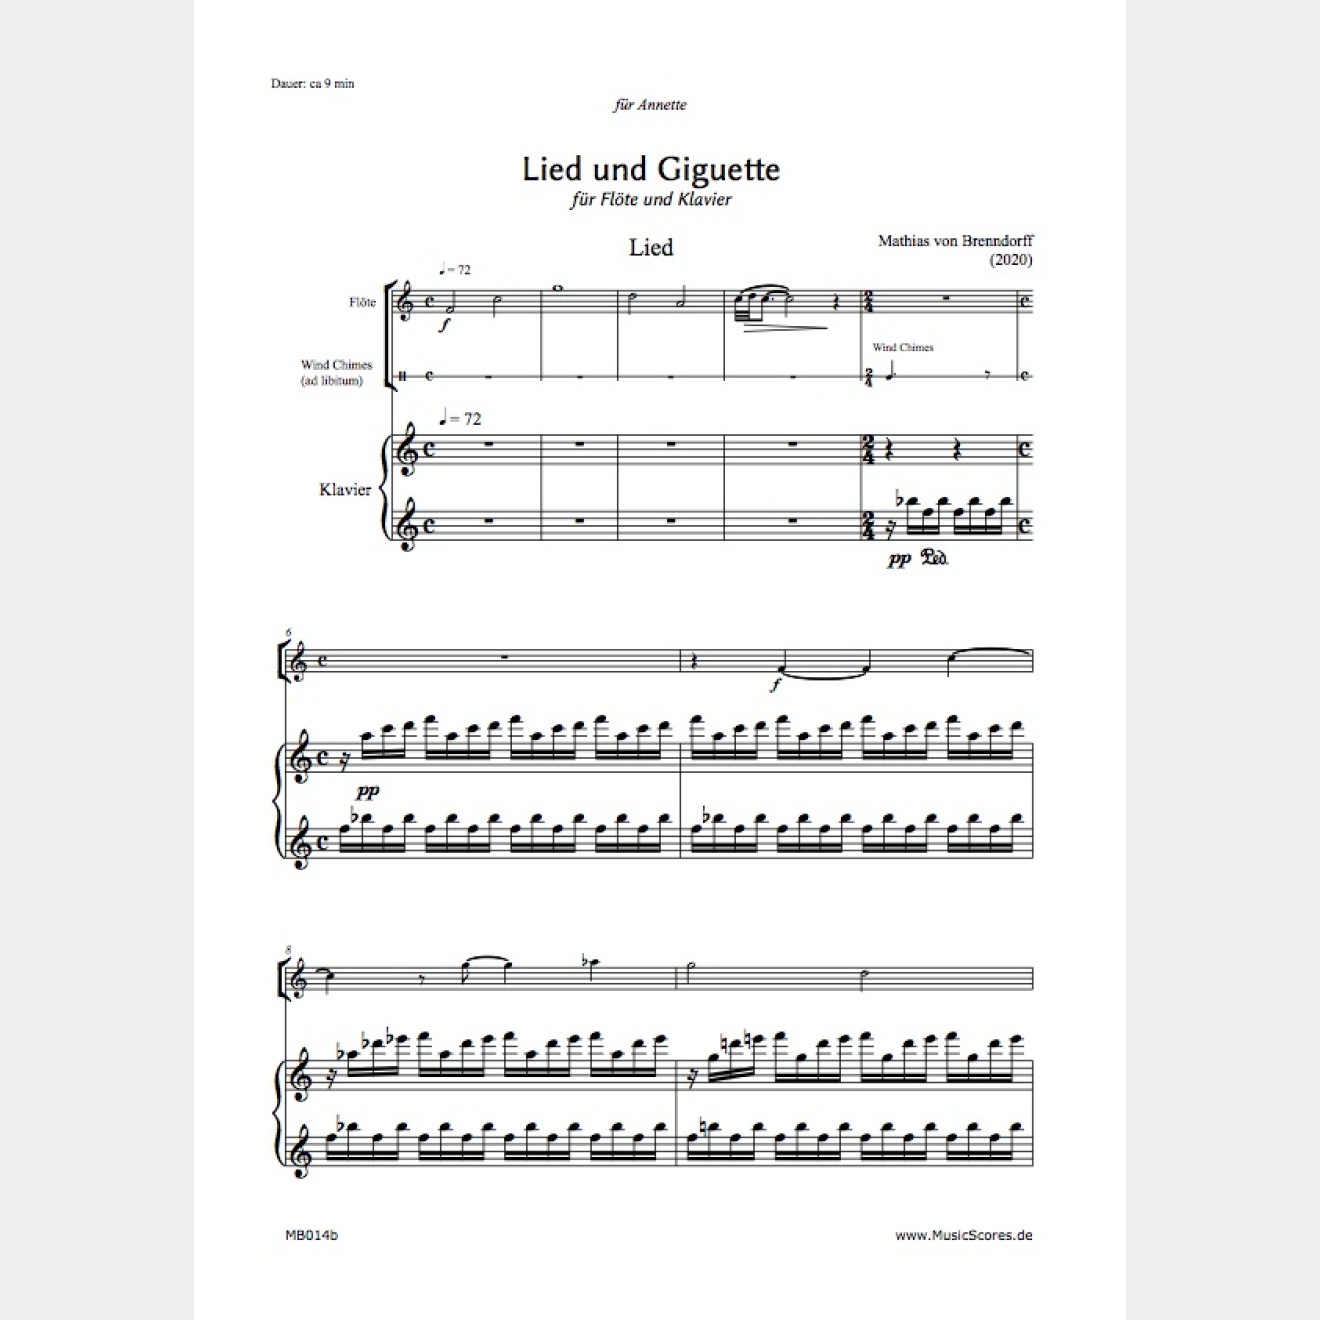 Lied und Giguette, (Score and Part), 9'